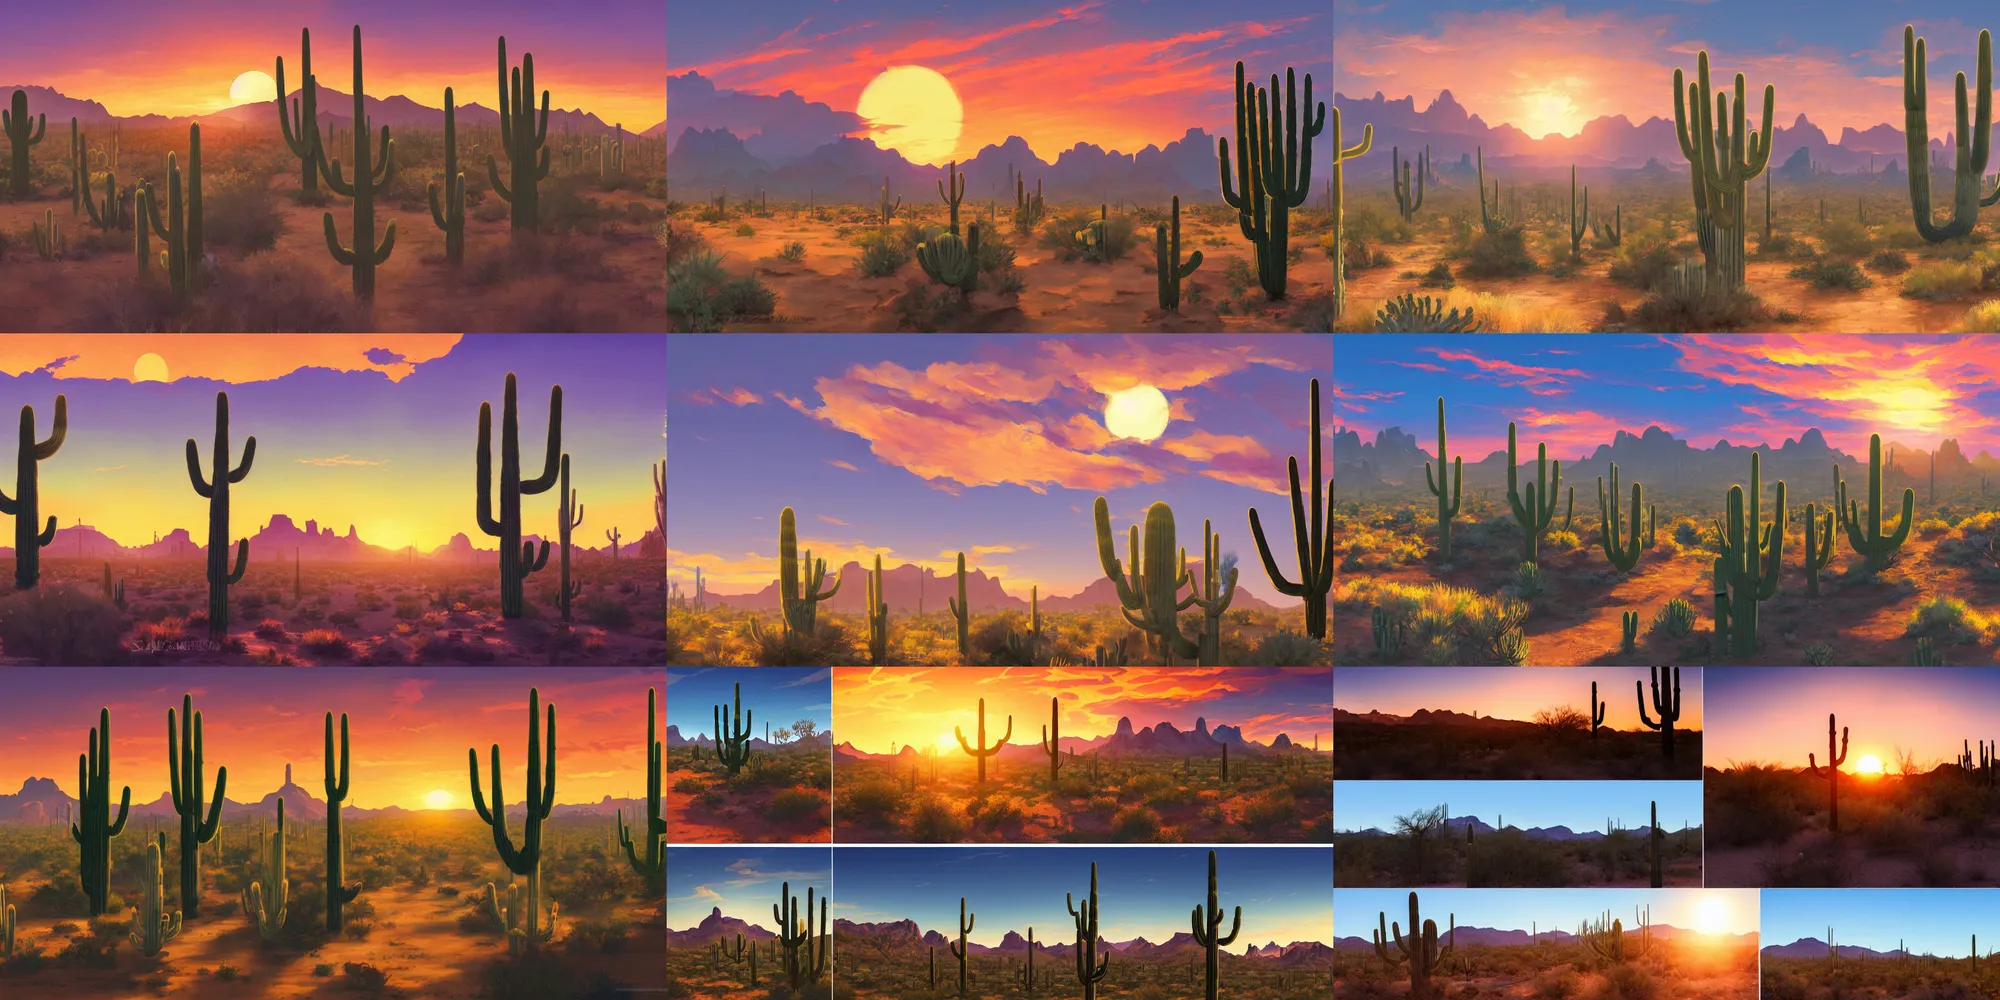 sonoran desert sunset wallpaper